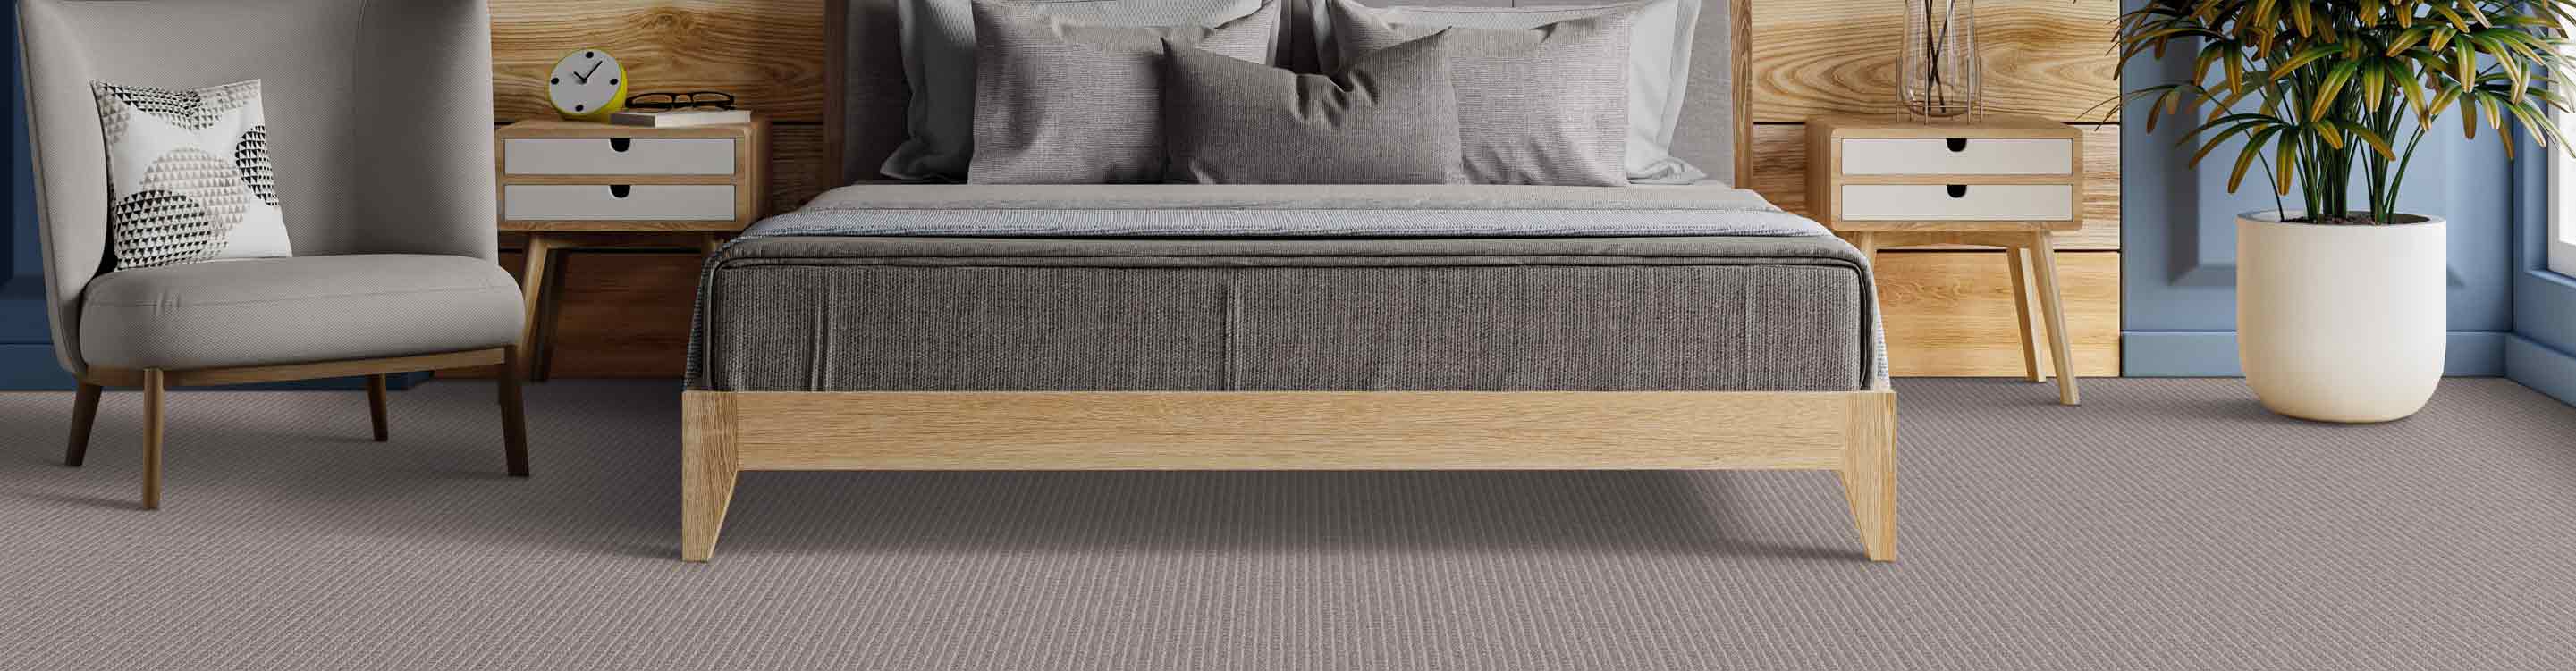 structured grey carpet in bedroom 